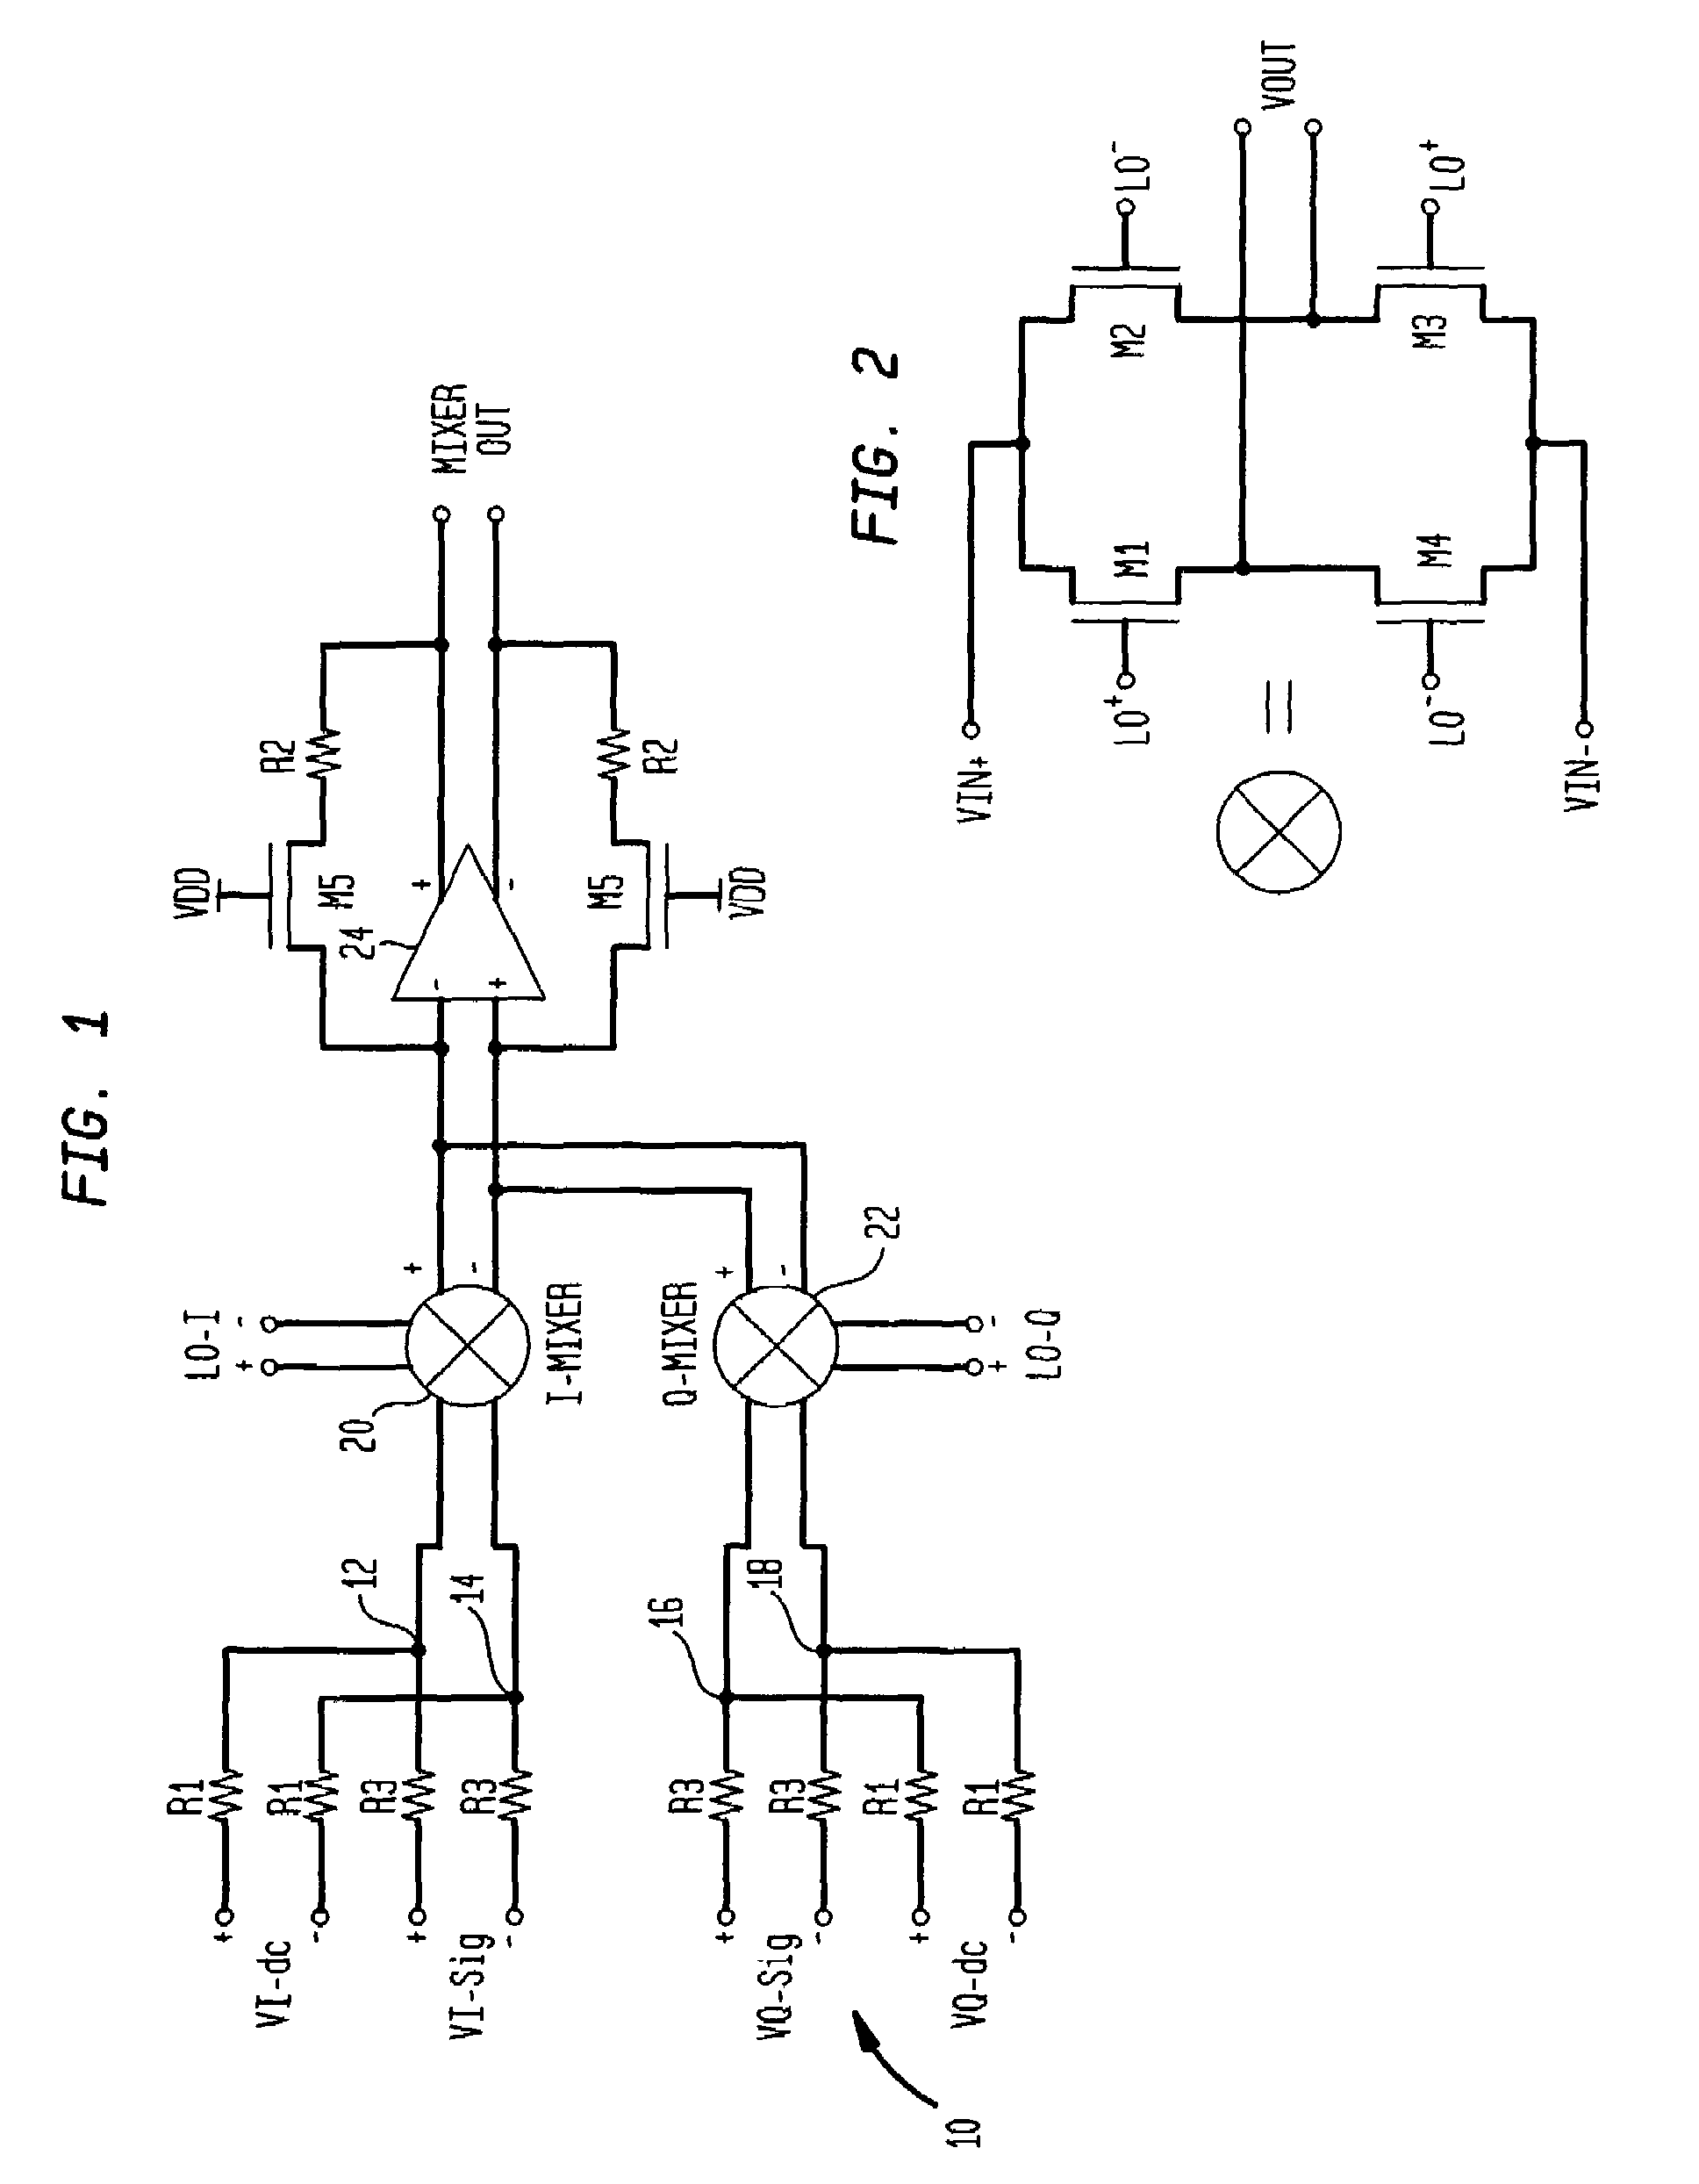 DC offset calibration for a radio transceiver mixer